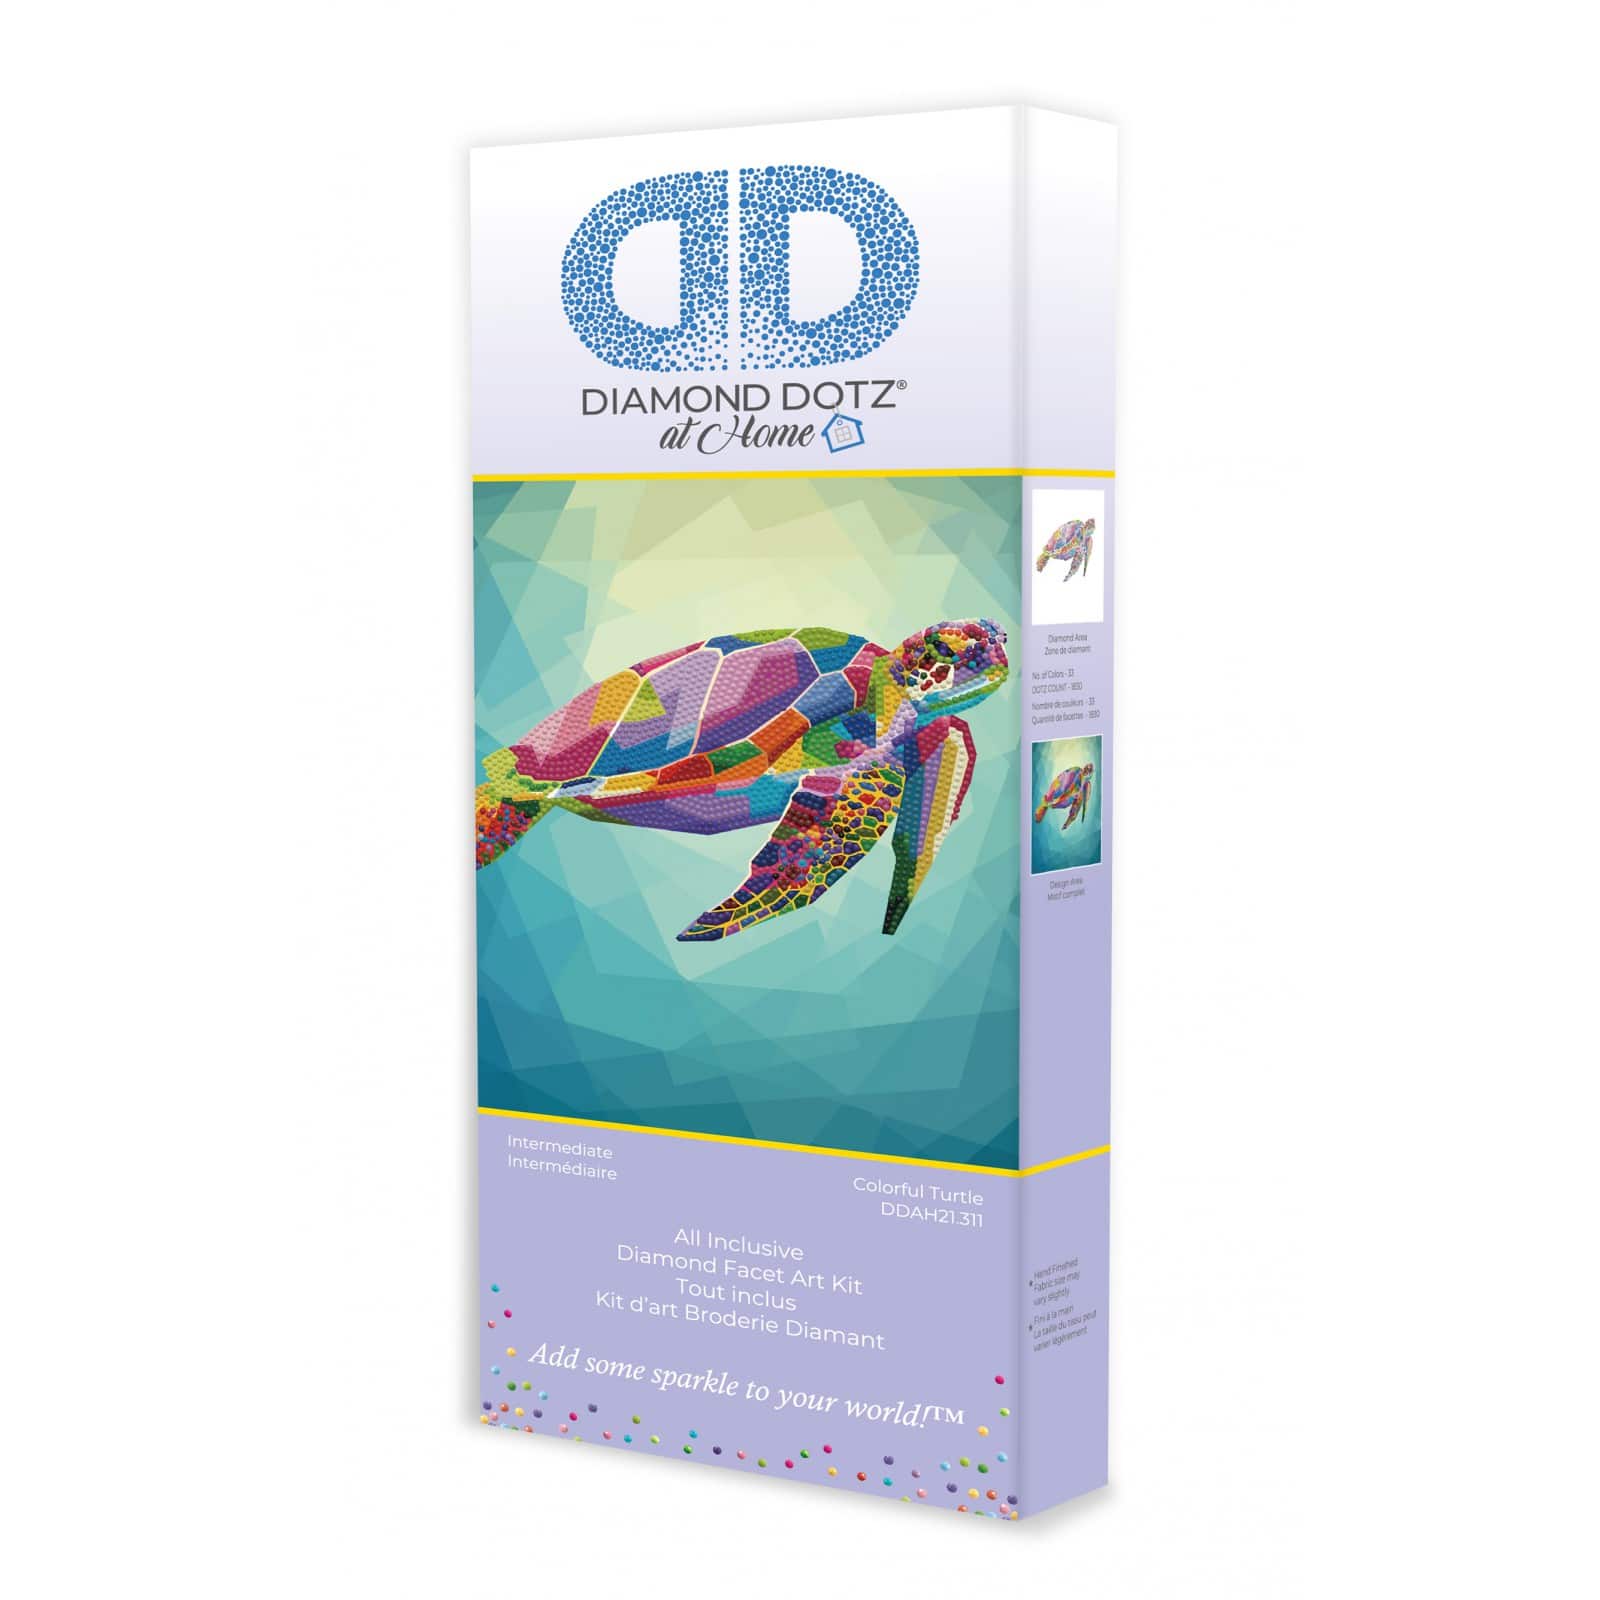 Diamond Dotz® at Home Intermediate Colorful Turtle Diamond